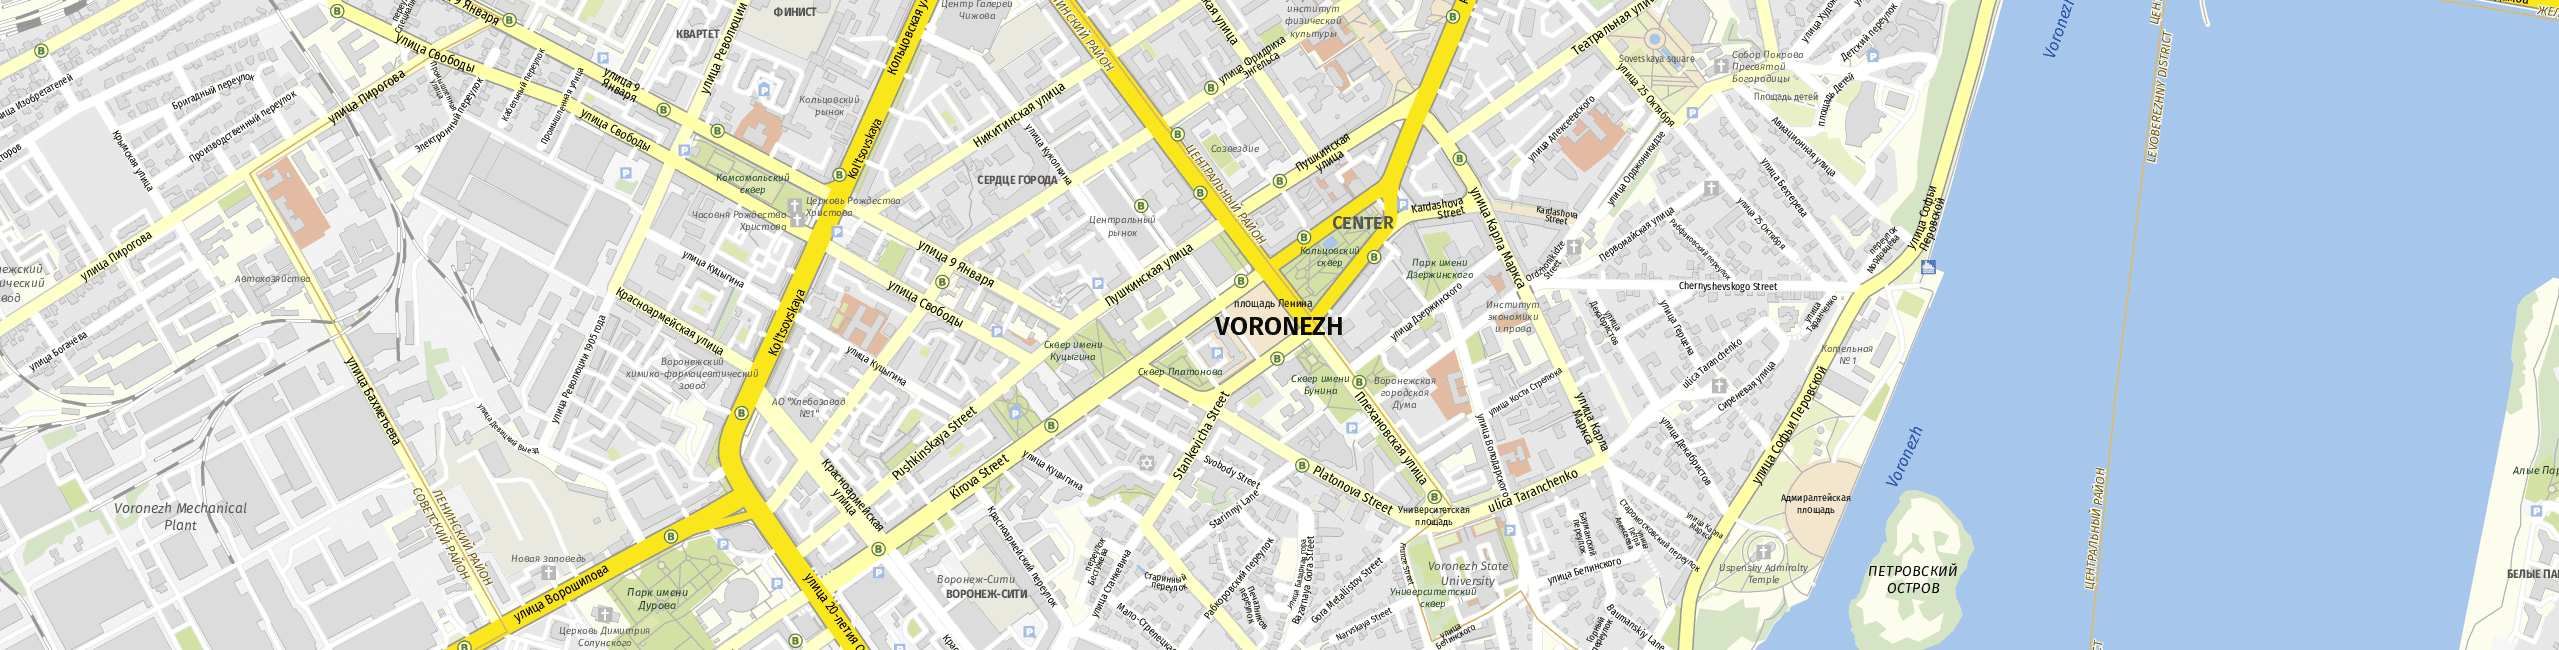 Stadtplan Voronezh zum Downloaden.